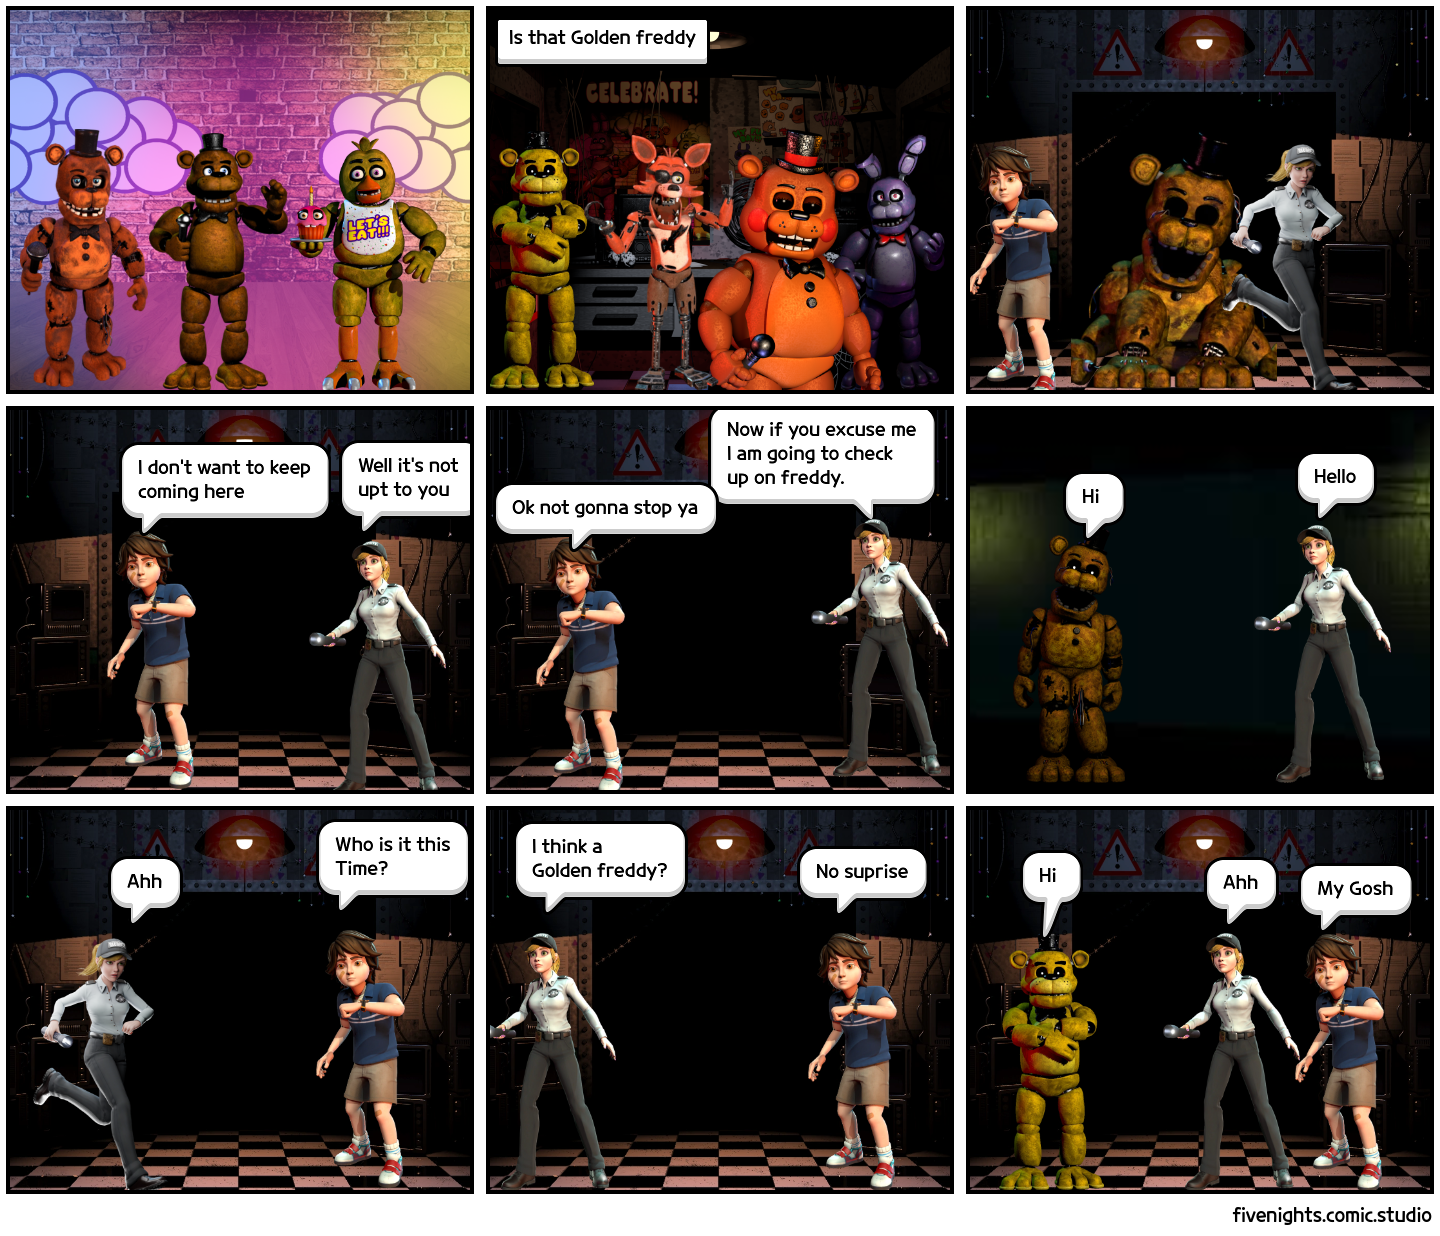 Browse Five Nights At Freddys (fnaf) Comics - Comic Studio